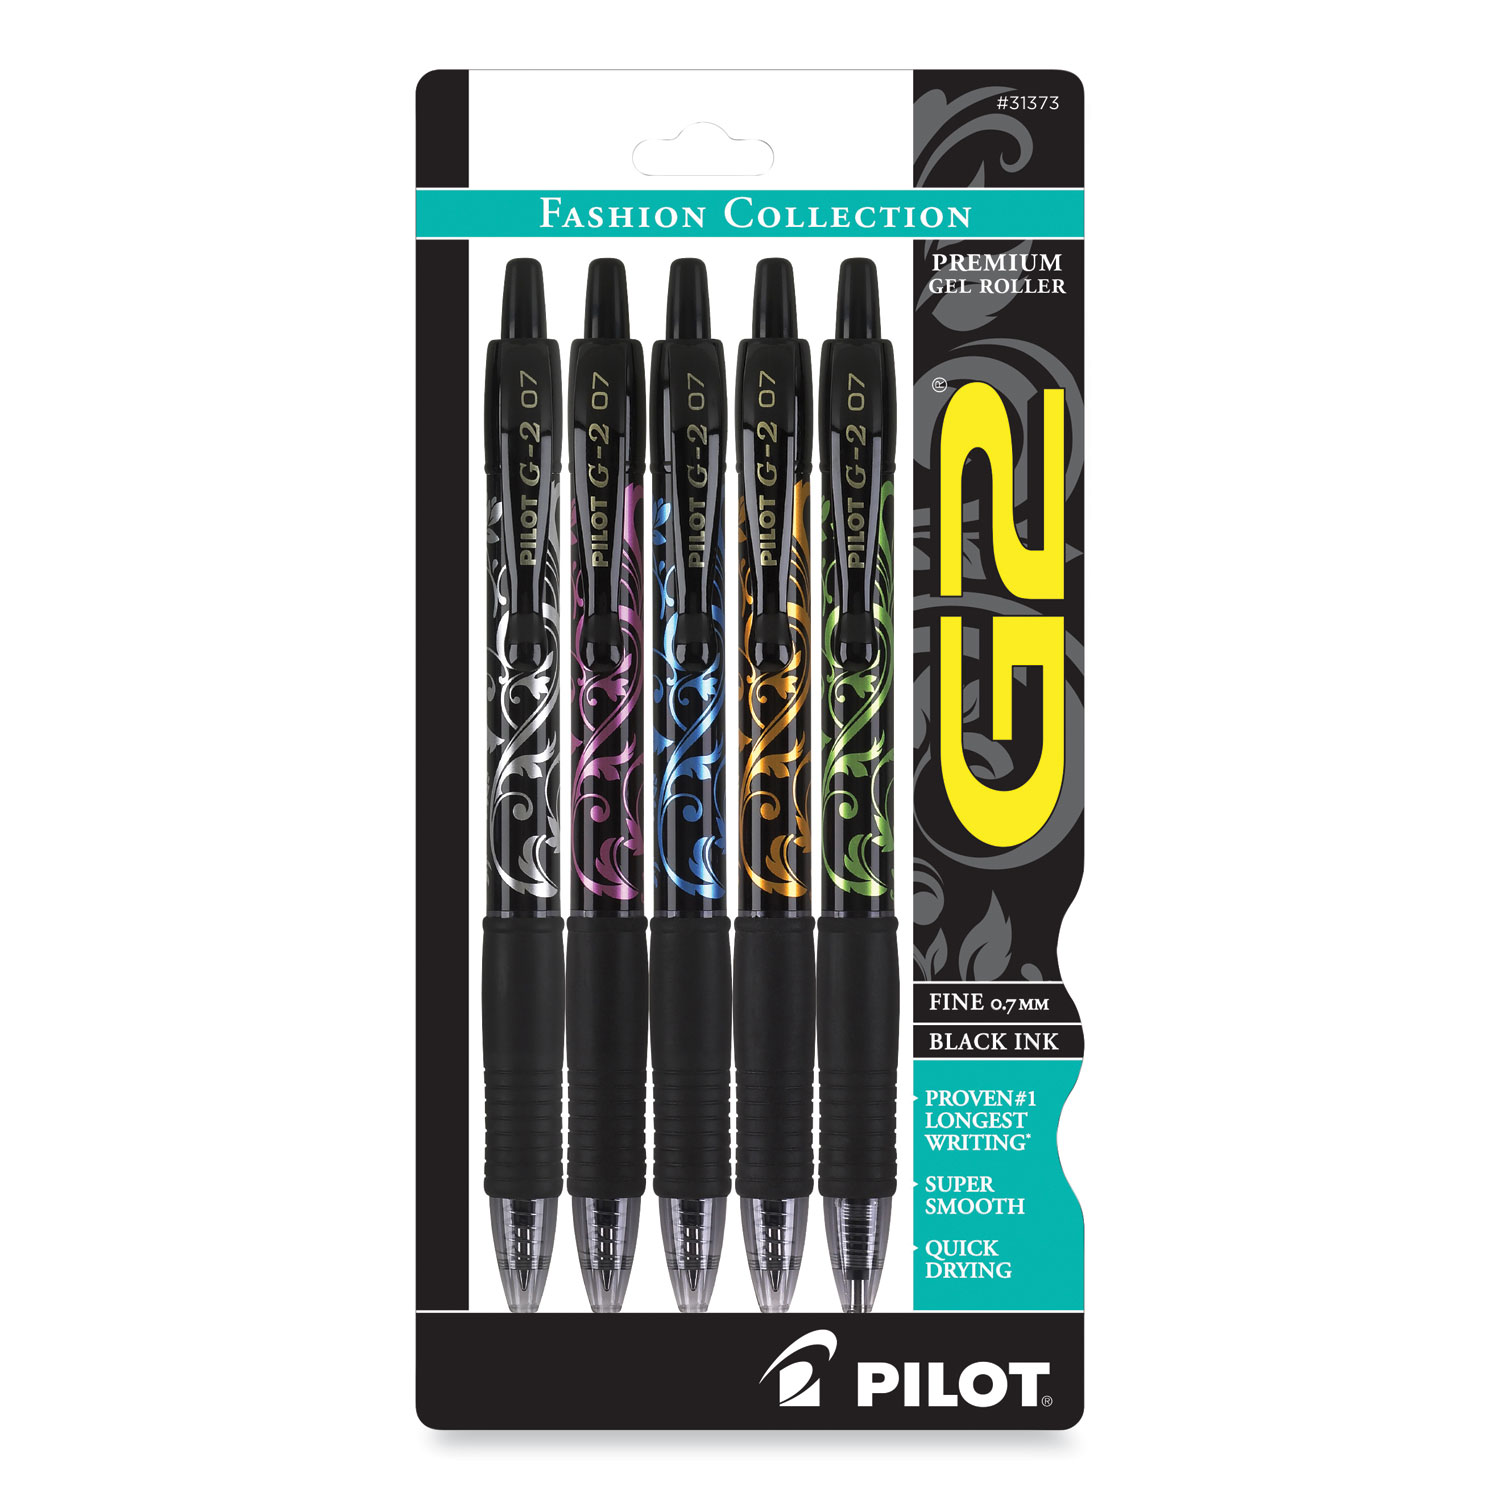 Mr. Pen- Pens, Felt Tip Pens, Black Pens, 12 Pack - Mr. Pen Store